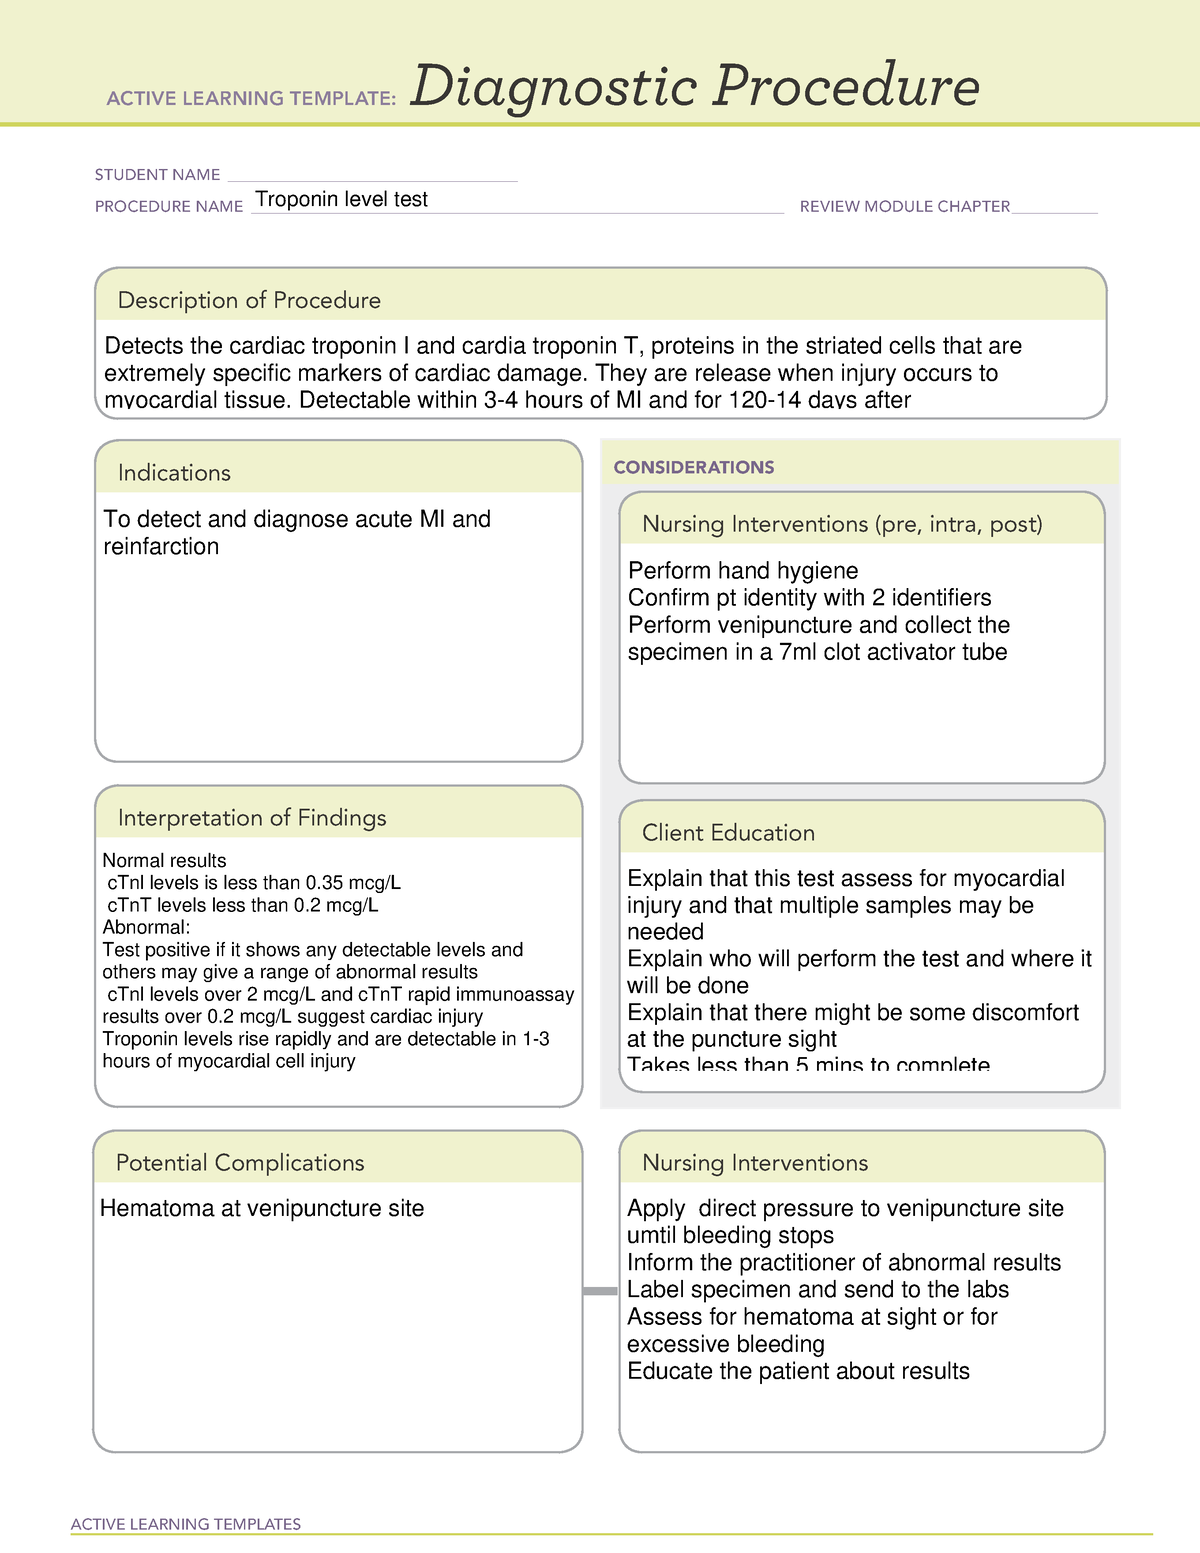 ATI Diagnostic Procedure Troponin pdf ACTIVE LEARNING TEMPLATES 